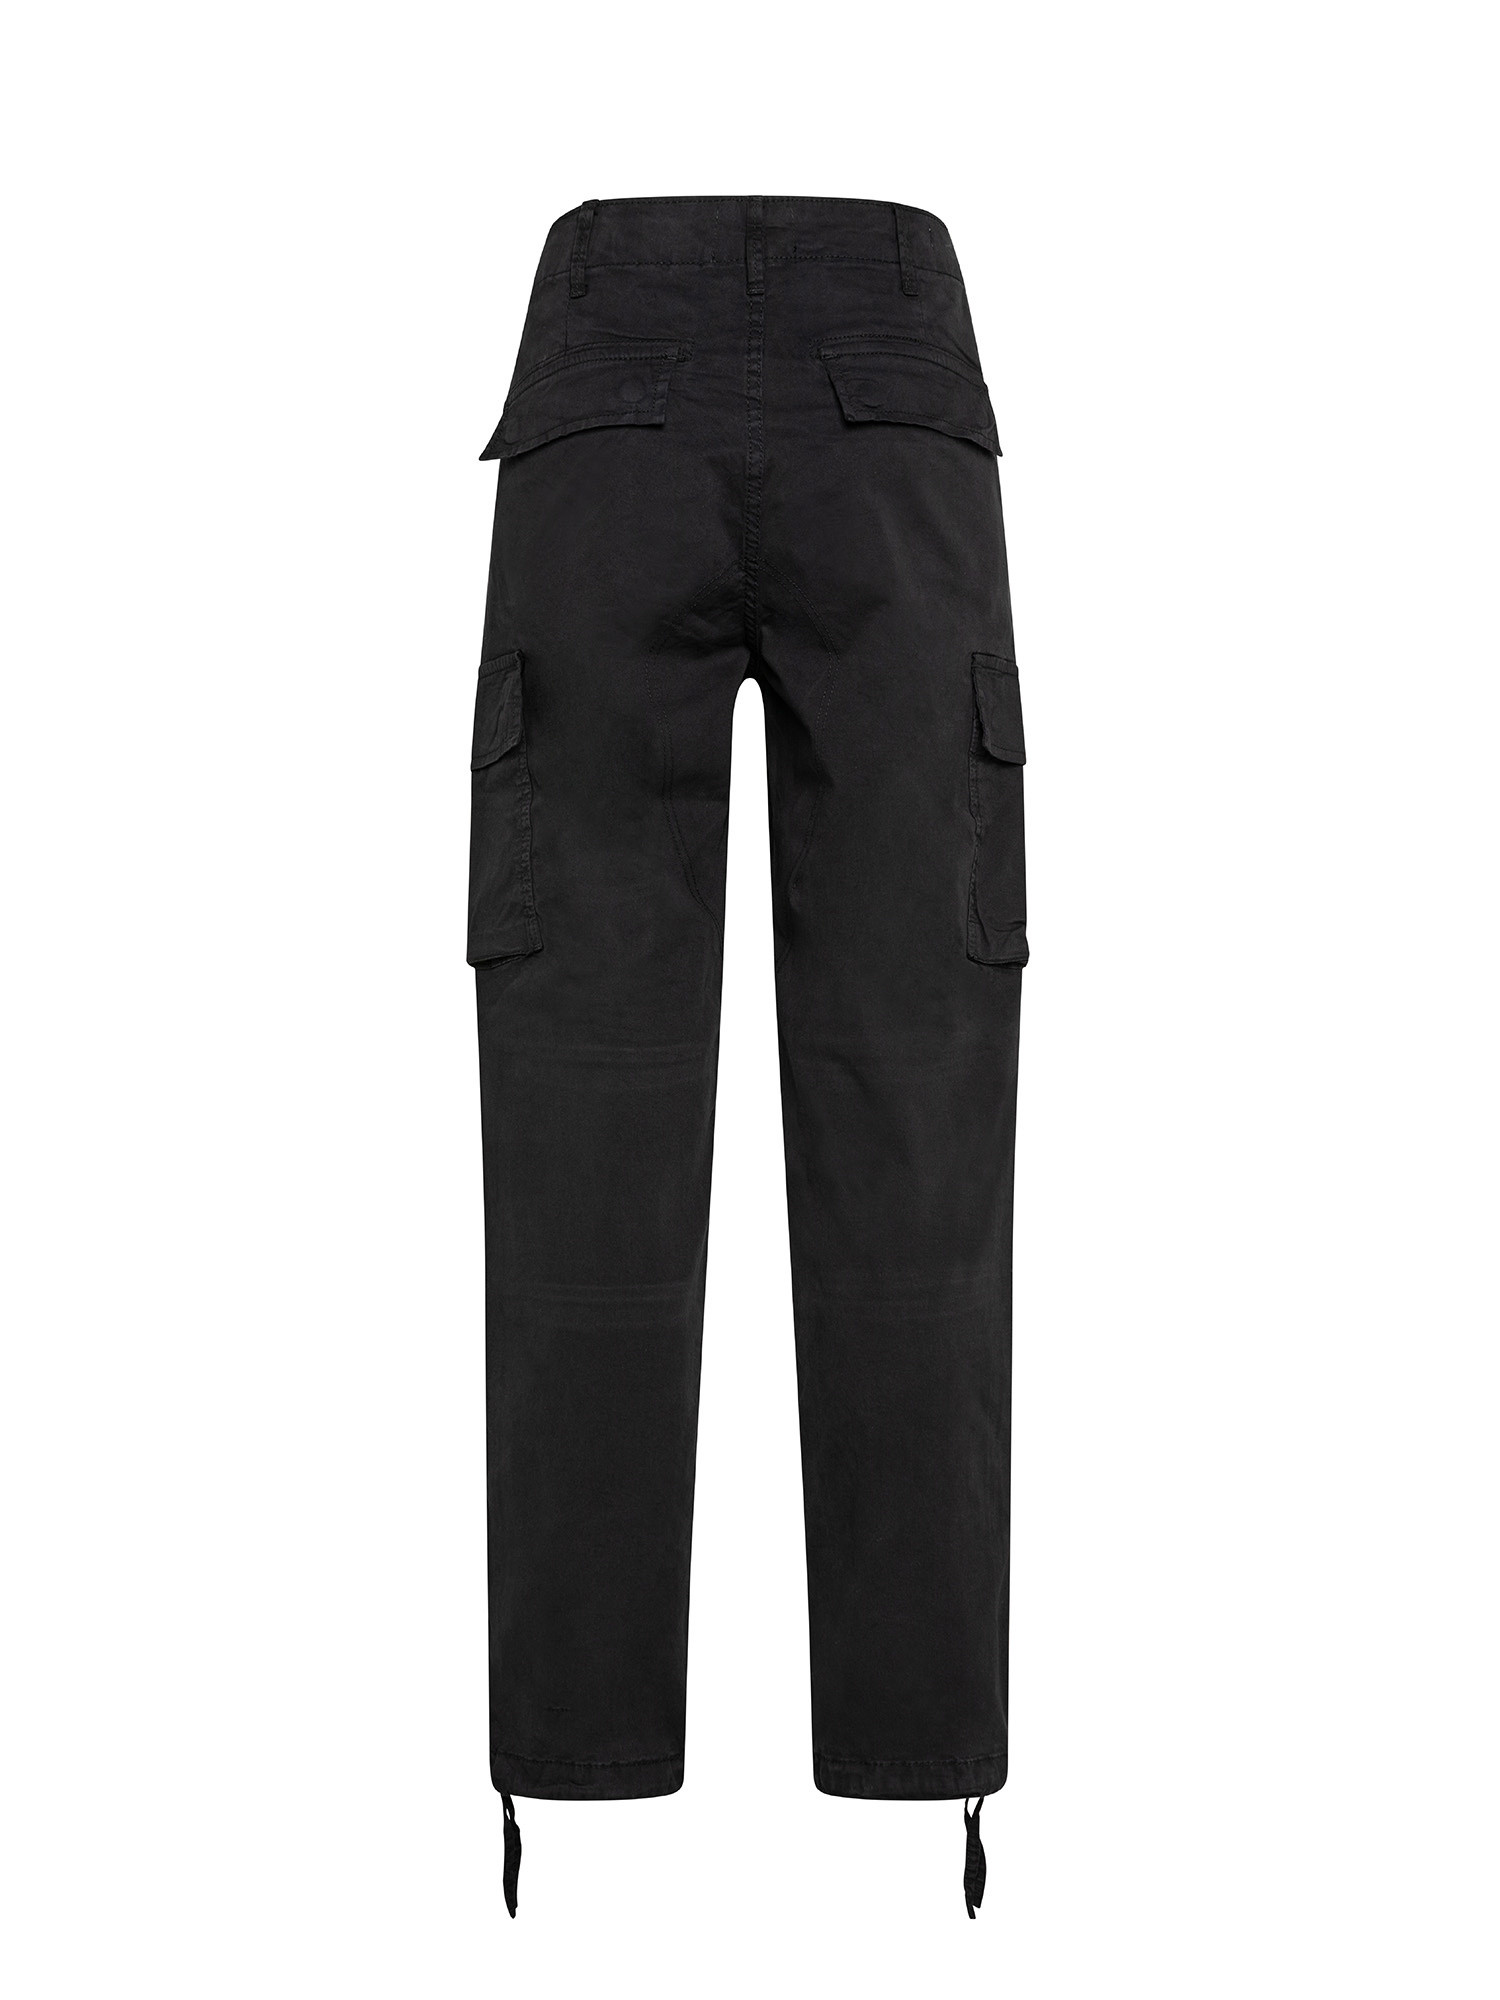 Pantaloni cargo con tasche laterali, Nero, large image number 1